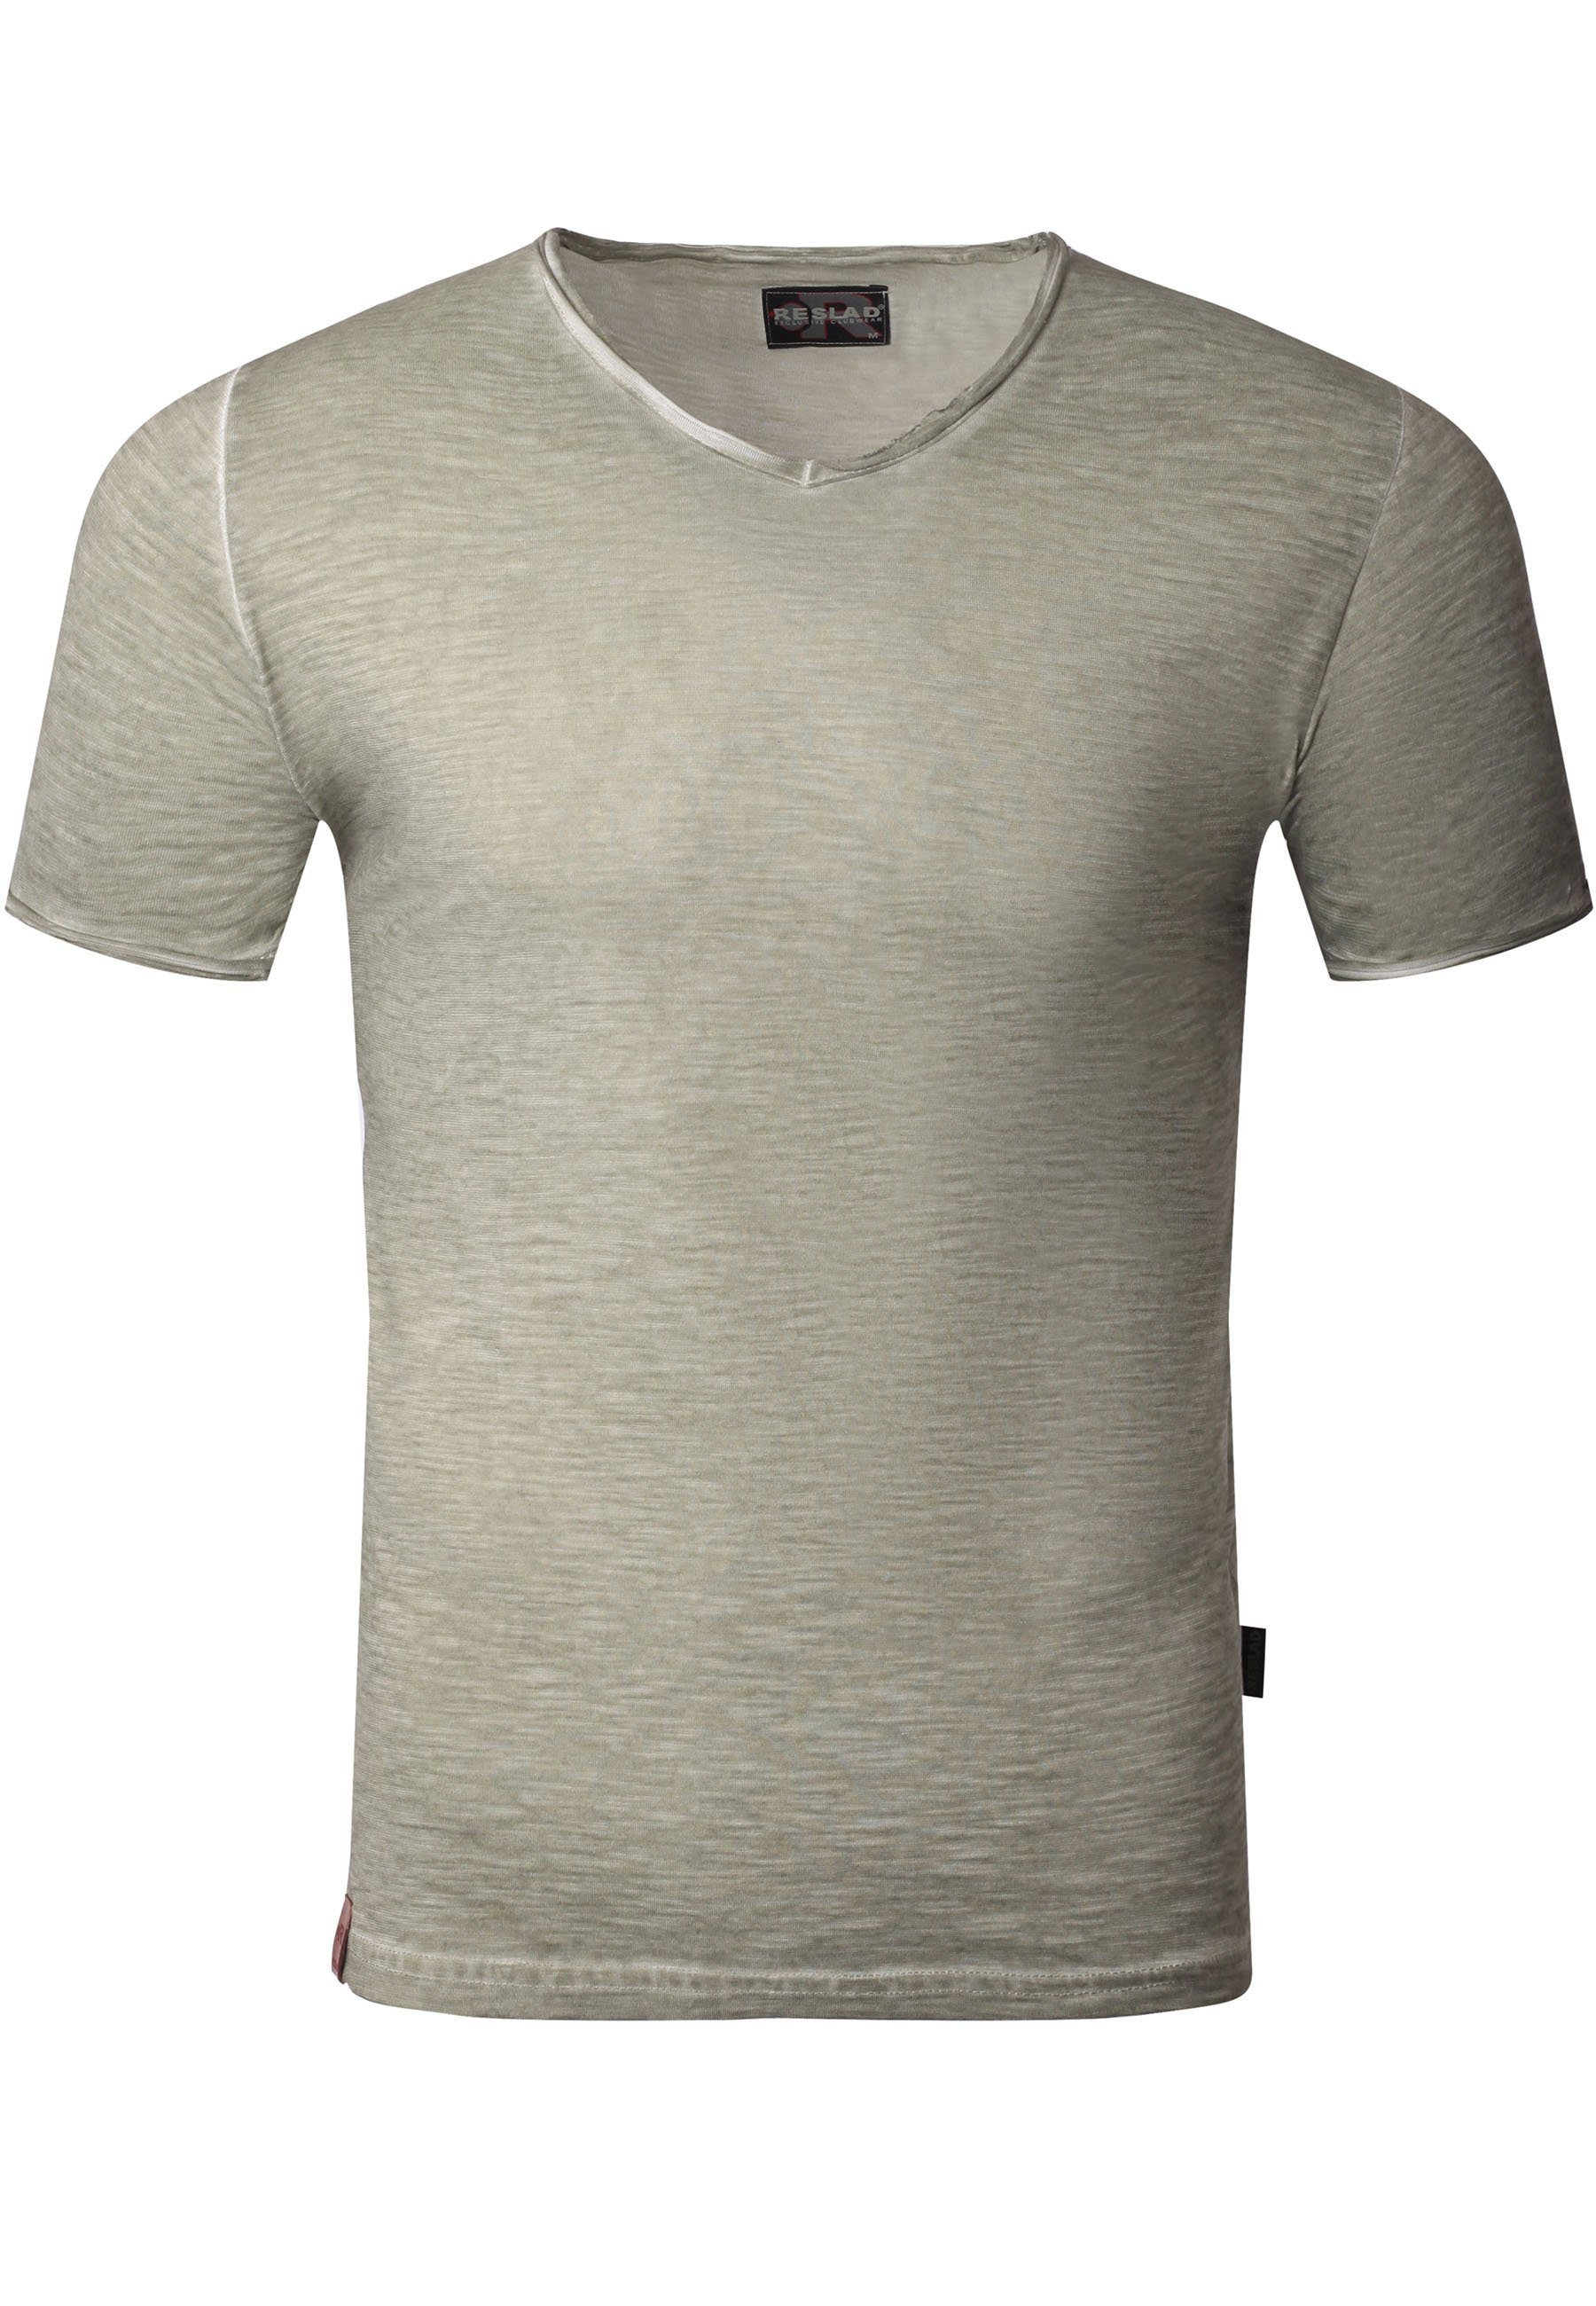 Männer Vintage Style (1-tlg) Optik Reslad Herren V-Neck T-Shirt Shirt verwaschen Reslad khaki V-Ausschnitt T-Shirt Vintage Shirt